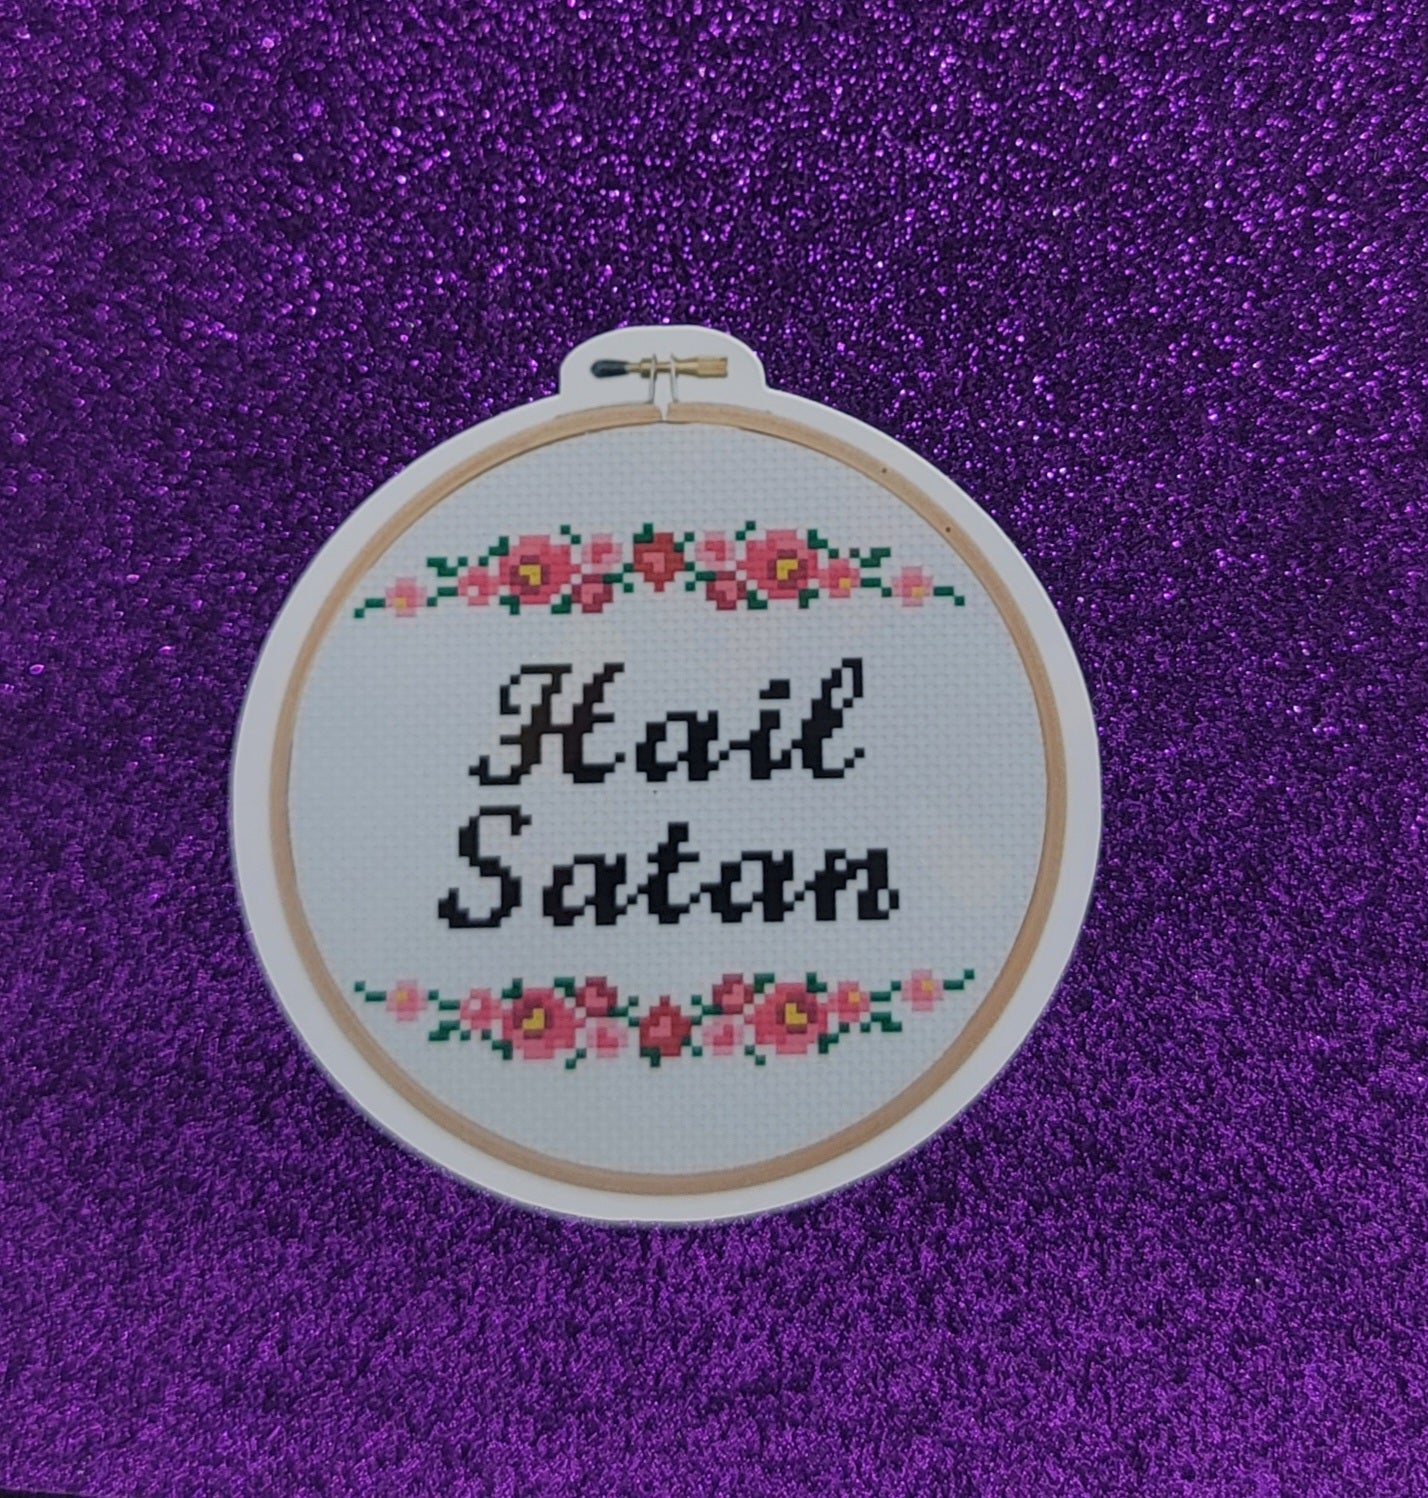 Hail Satan Cross Stitch Hoop Sticker 3"x3"